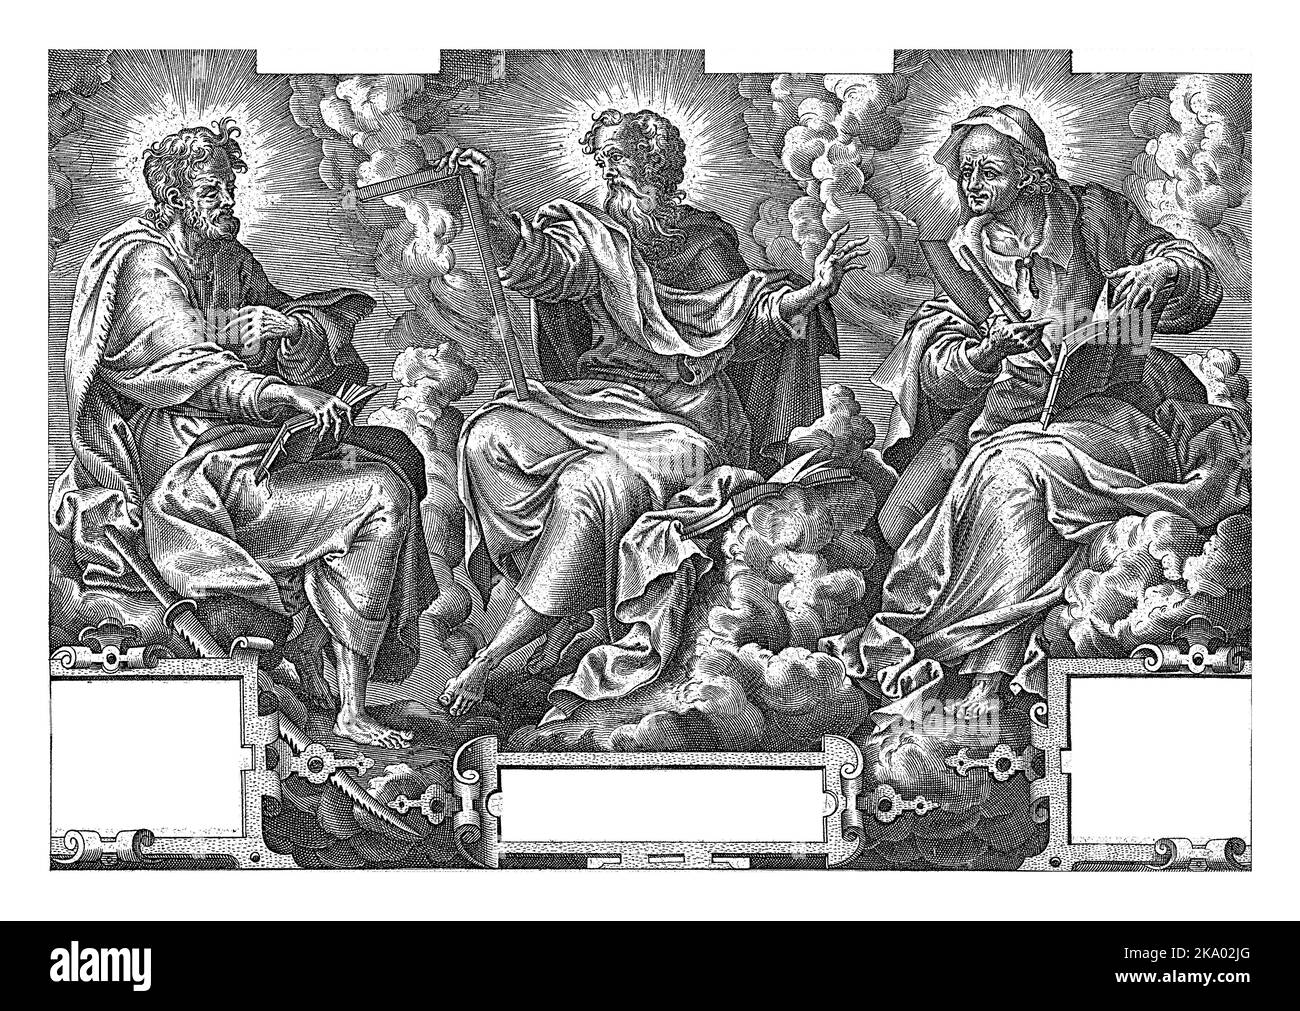 The apostles Simon Zelotes, Judas Thadeus and Matthias with a halo around their heads, seated among the clouds with their attributes, respectively saw Stock Photo